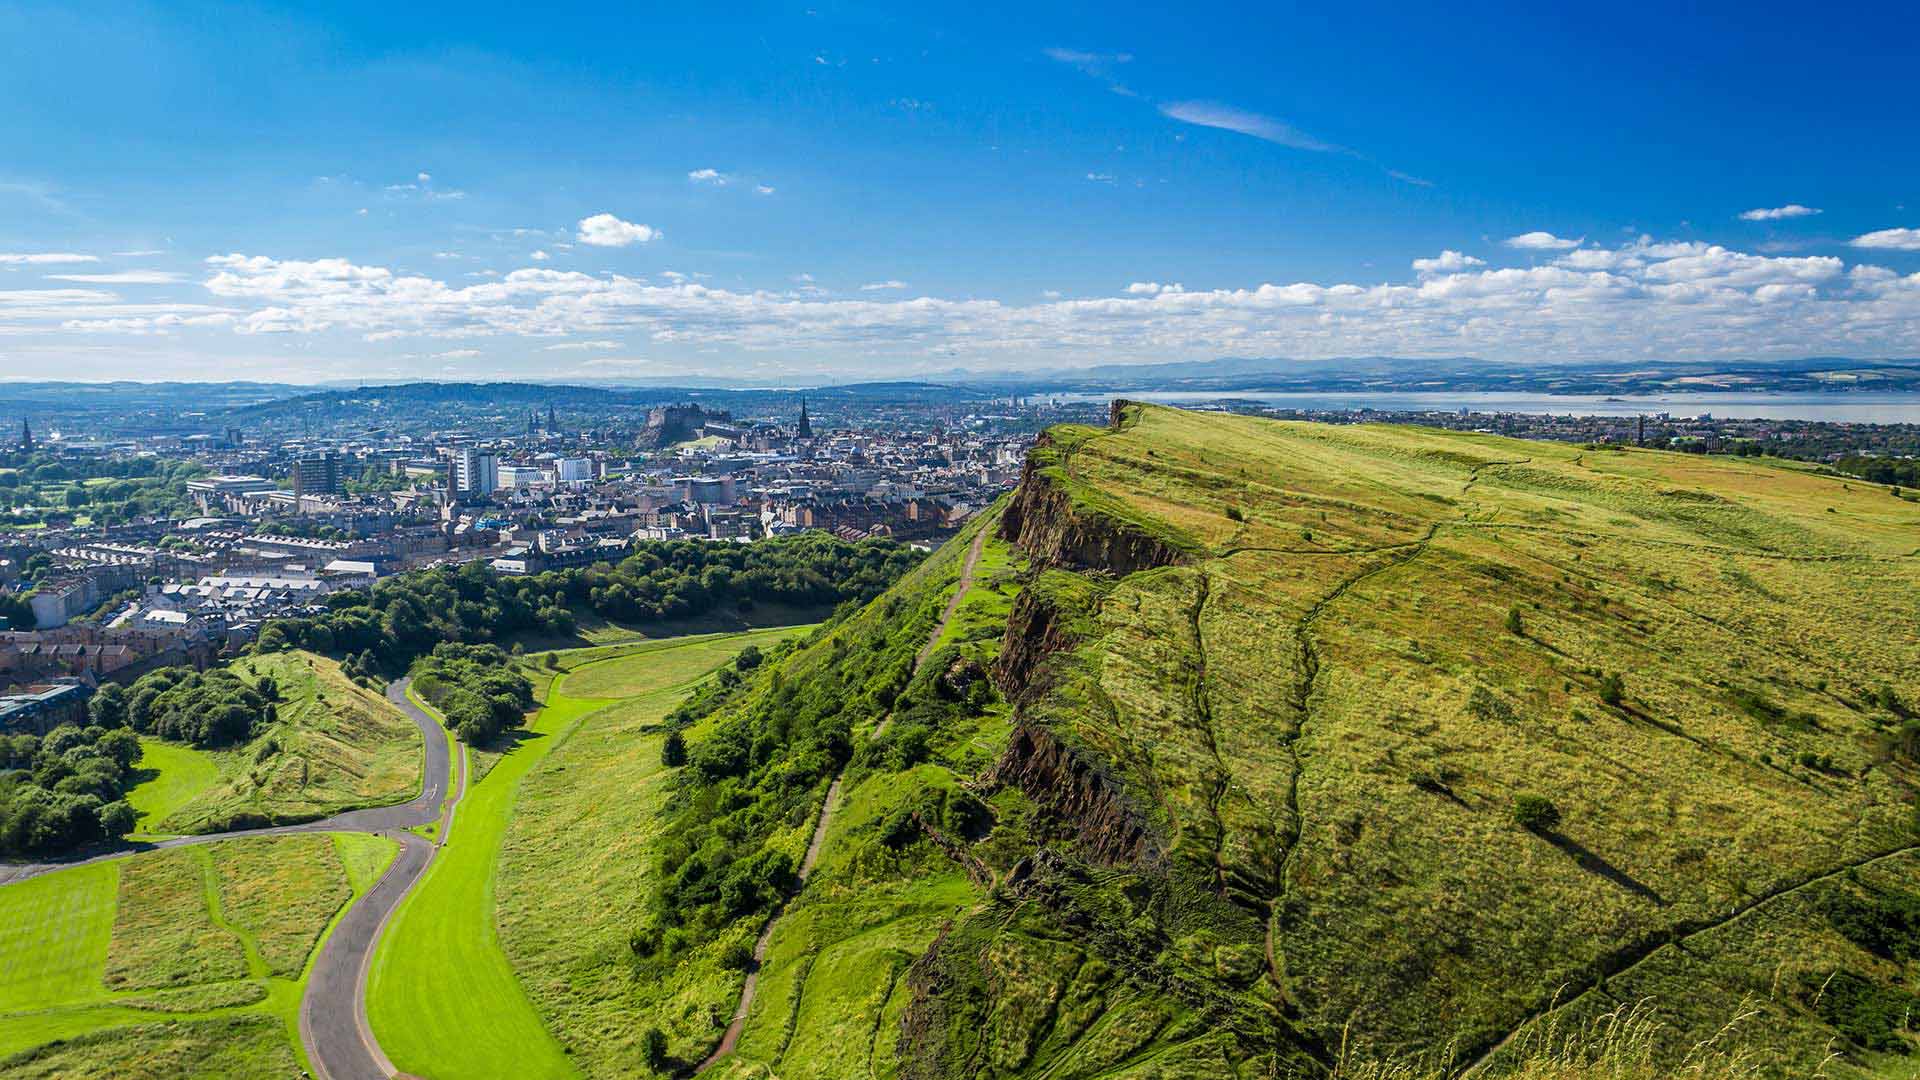 Edinburgh and Green Hills during Summer